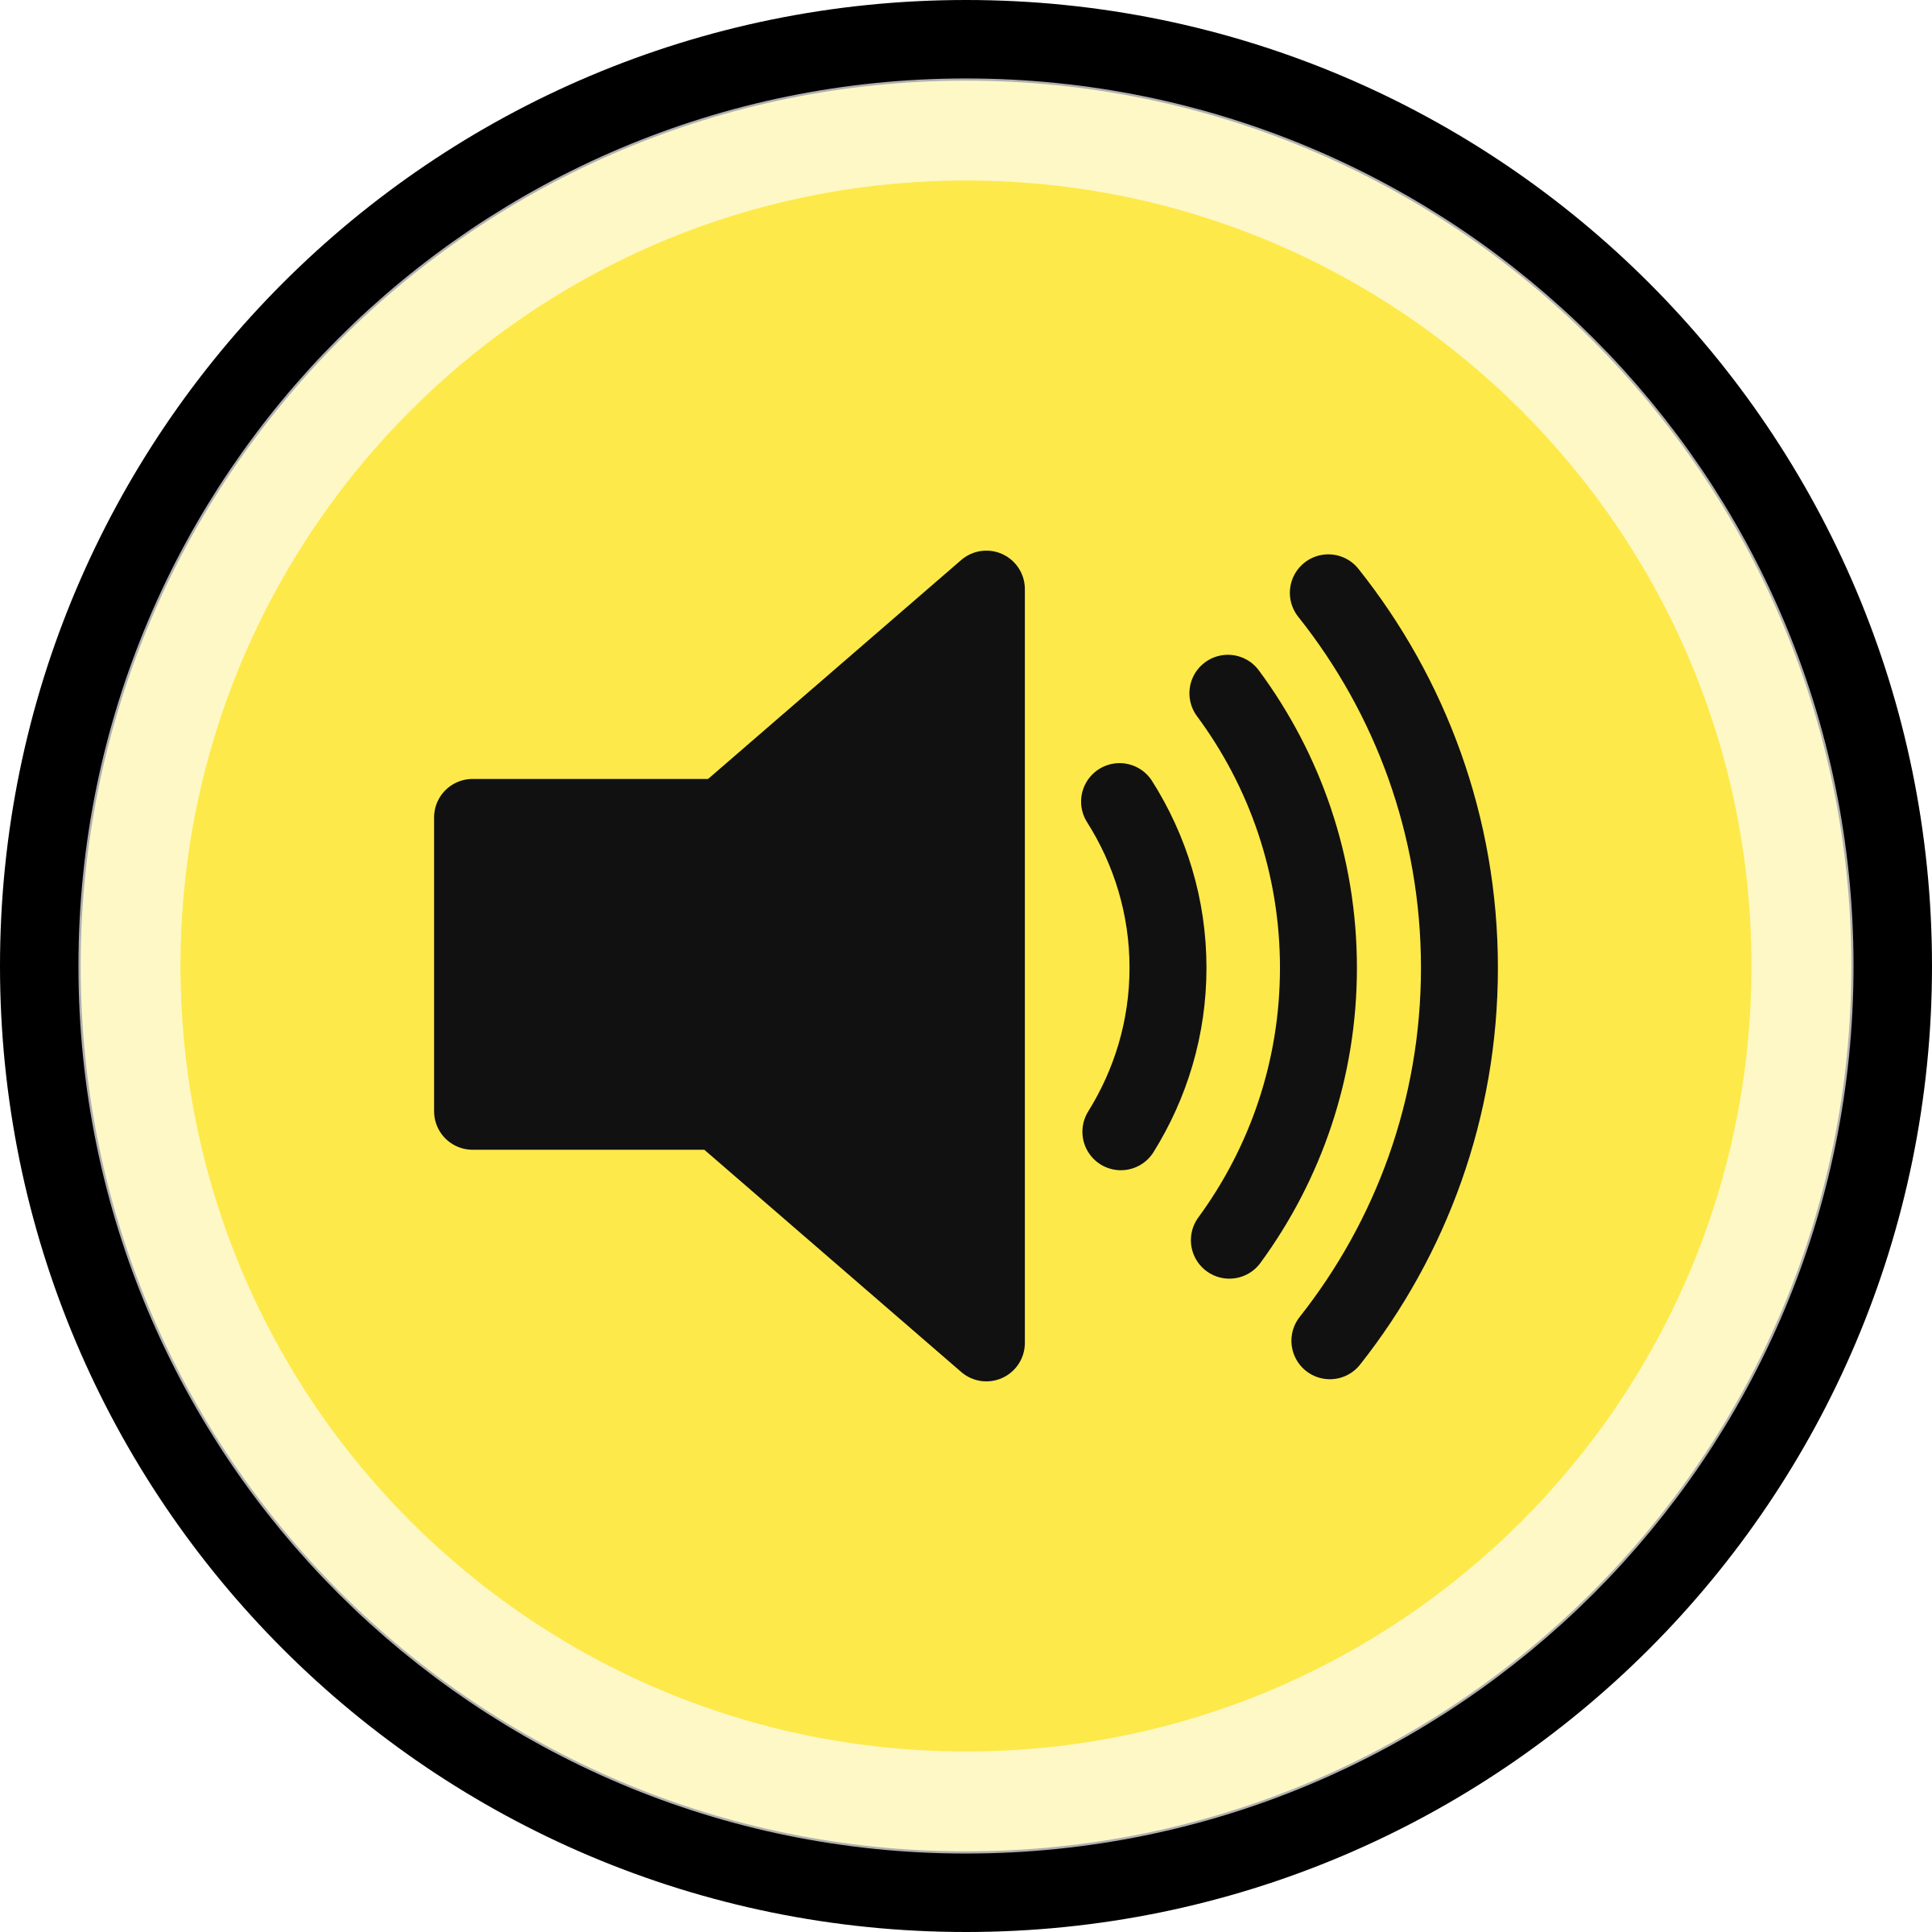 Sound emoji. Звук. Картинки на звук с. Кнопка аудио. Music download кнопка.